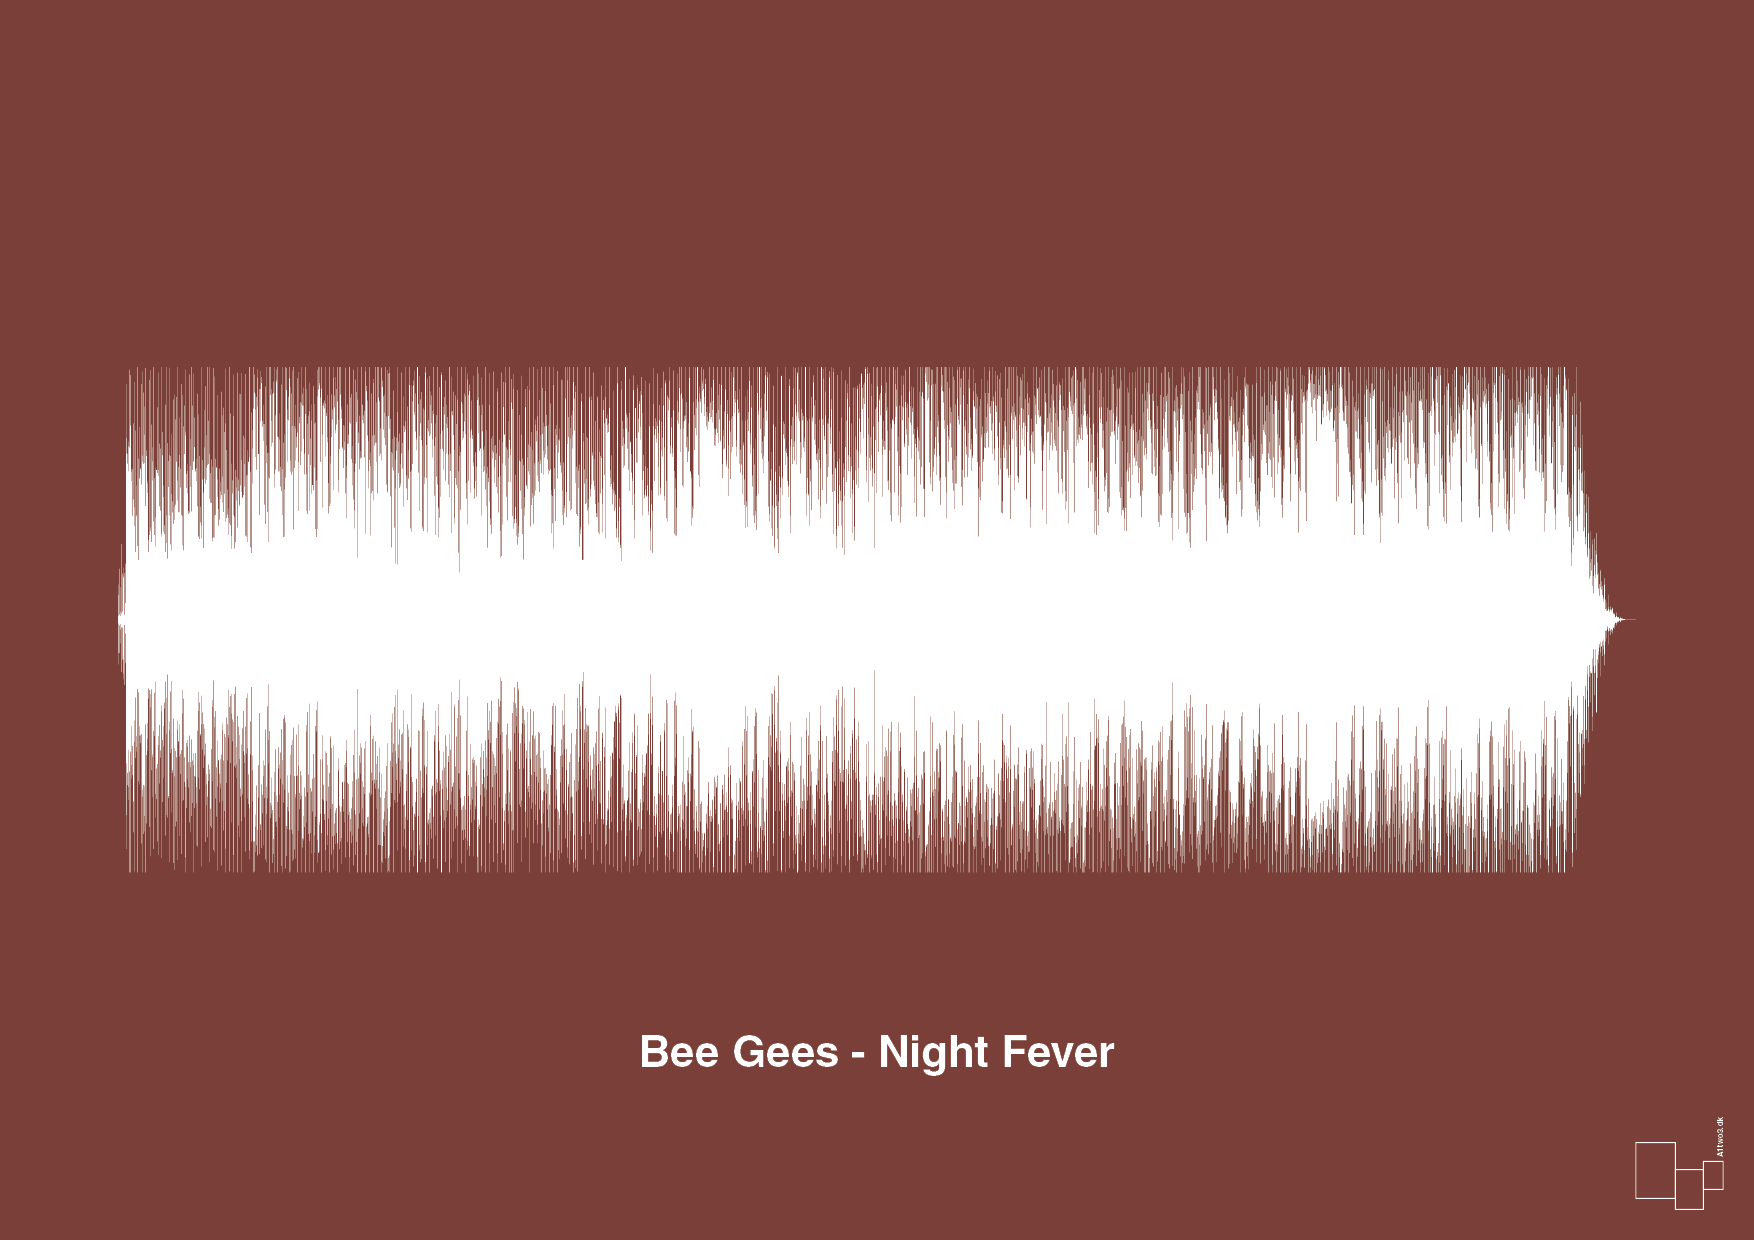 bee gees - night fever - Plakat med Musik i Red Pepper